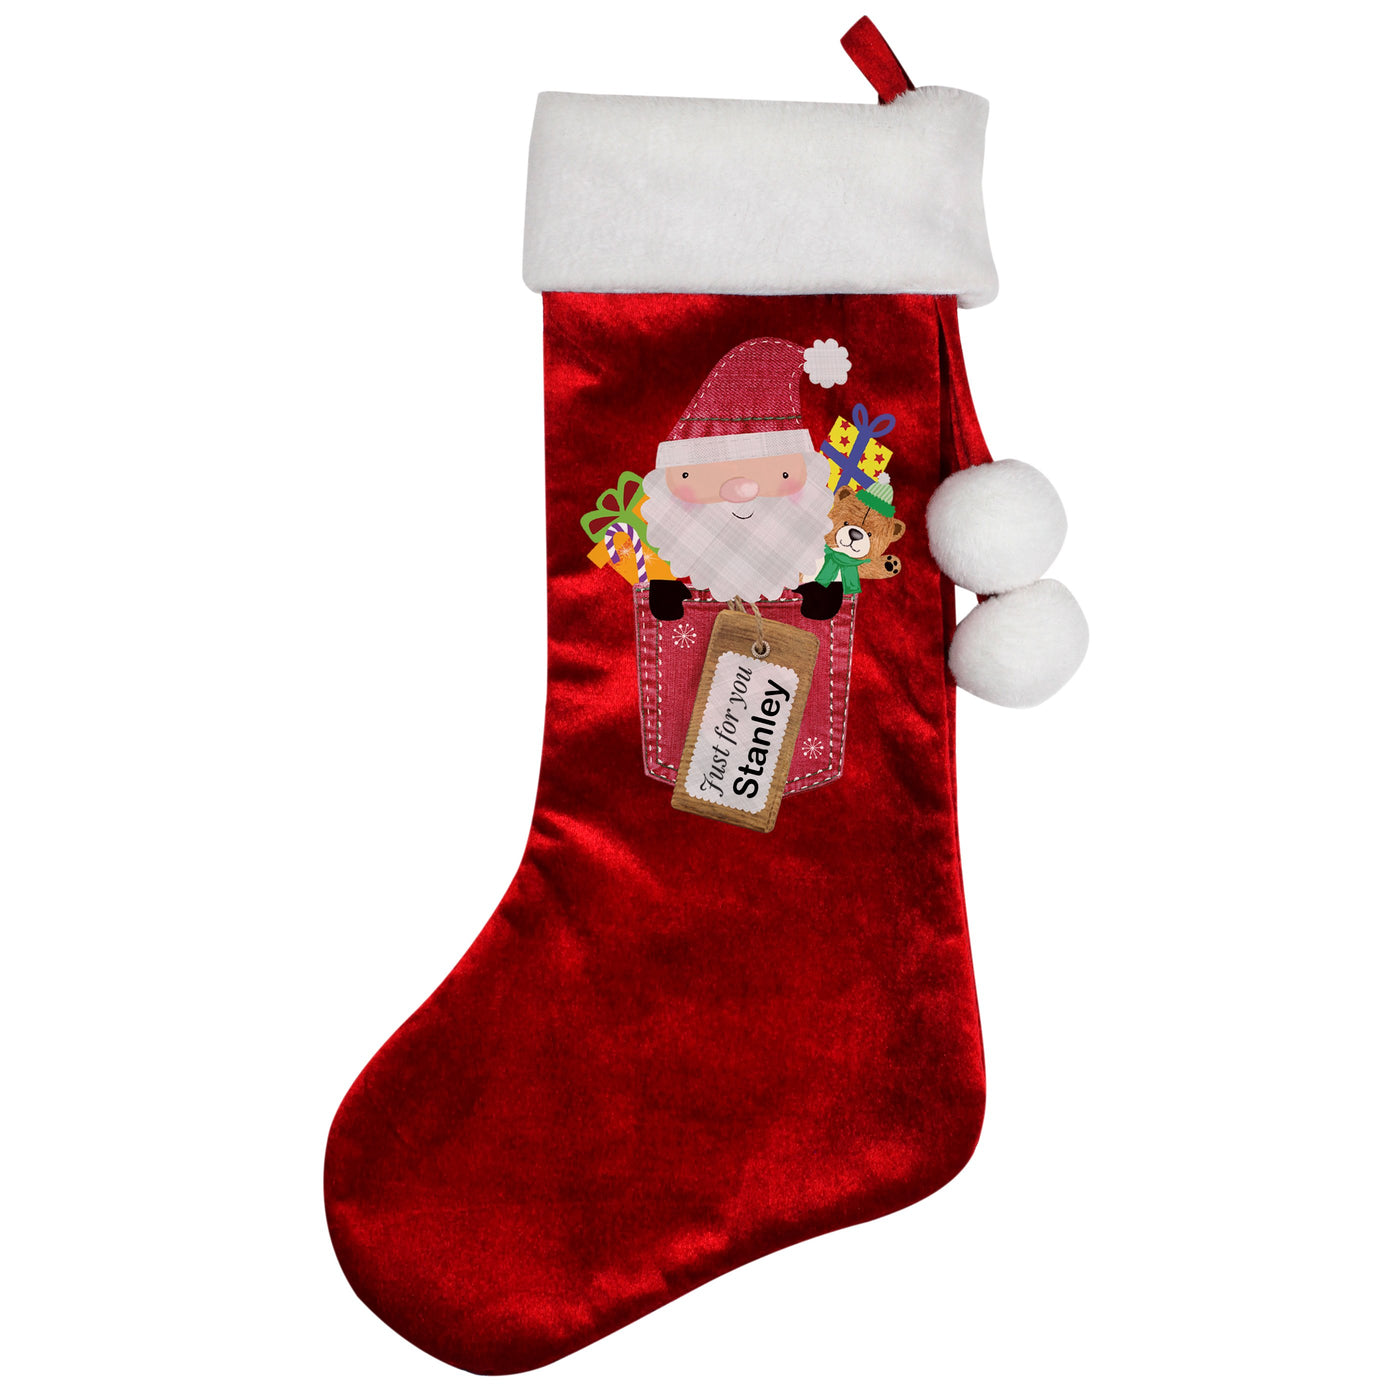 Personalised Santa Claus Luxury Stocking - Shop Personalised Gifts